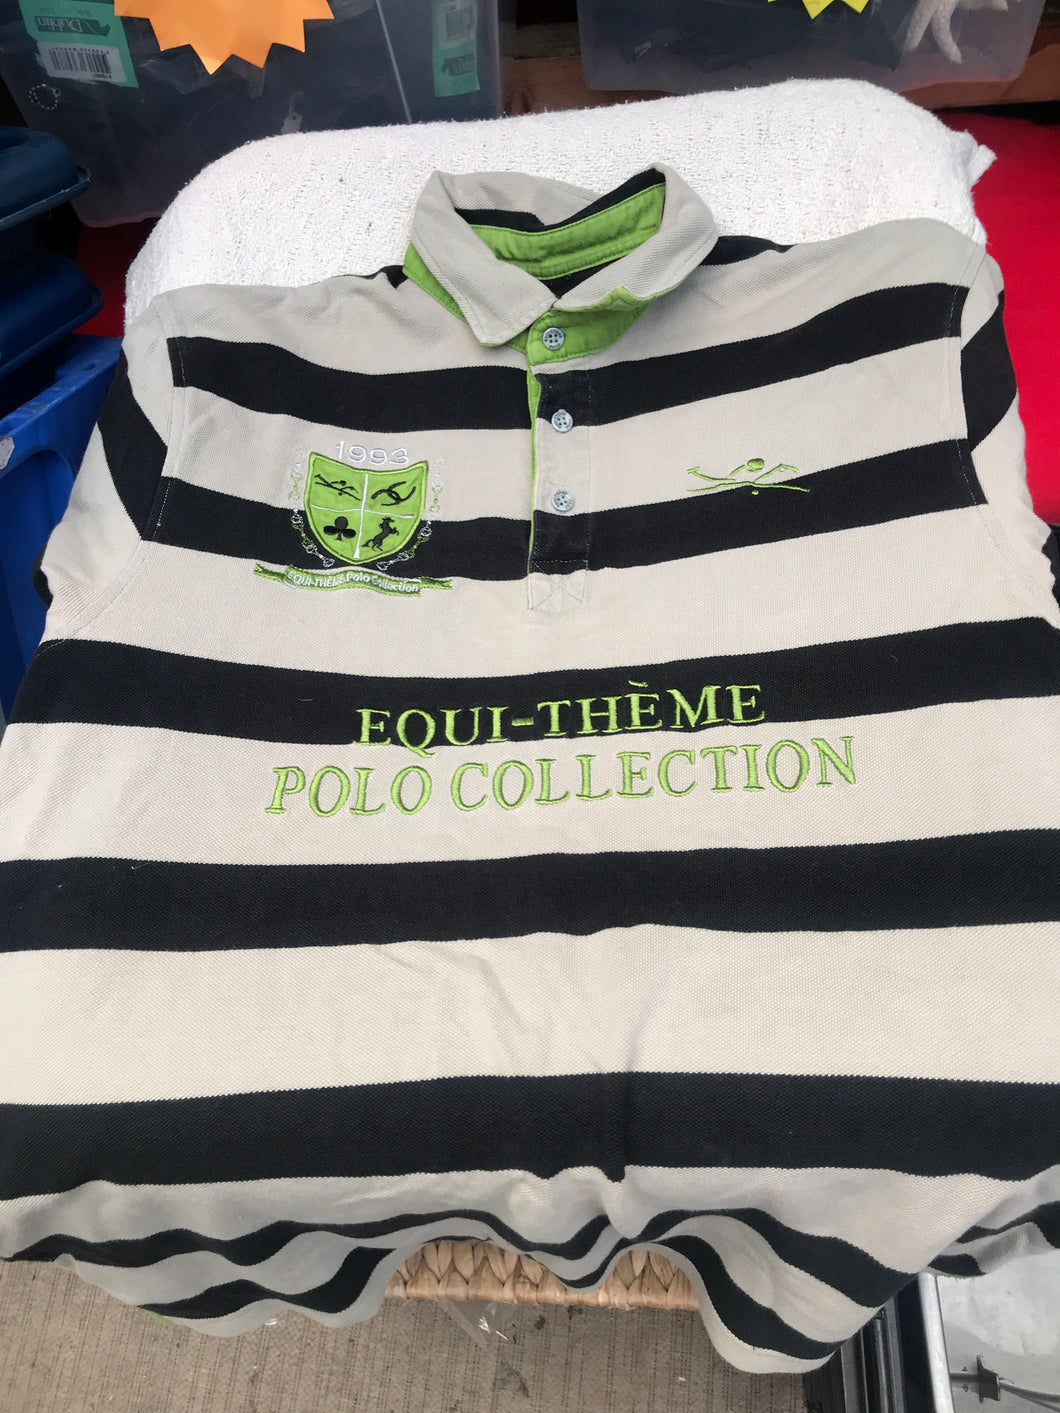 Equi-Thème polo t-shirt size large(16-18)FREE POSTAGE